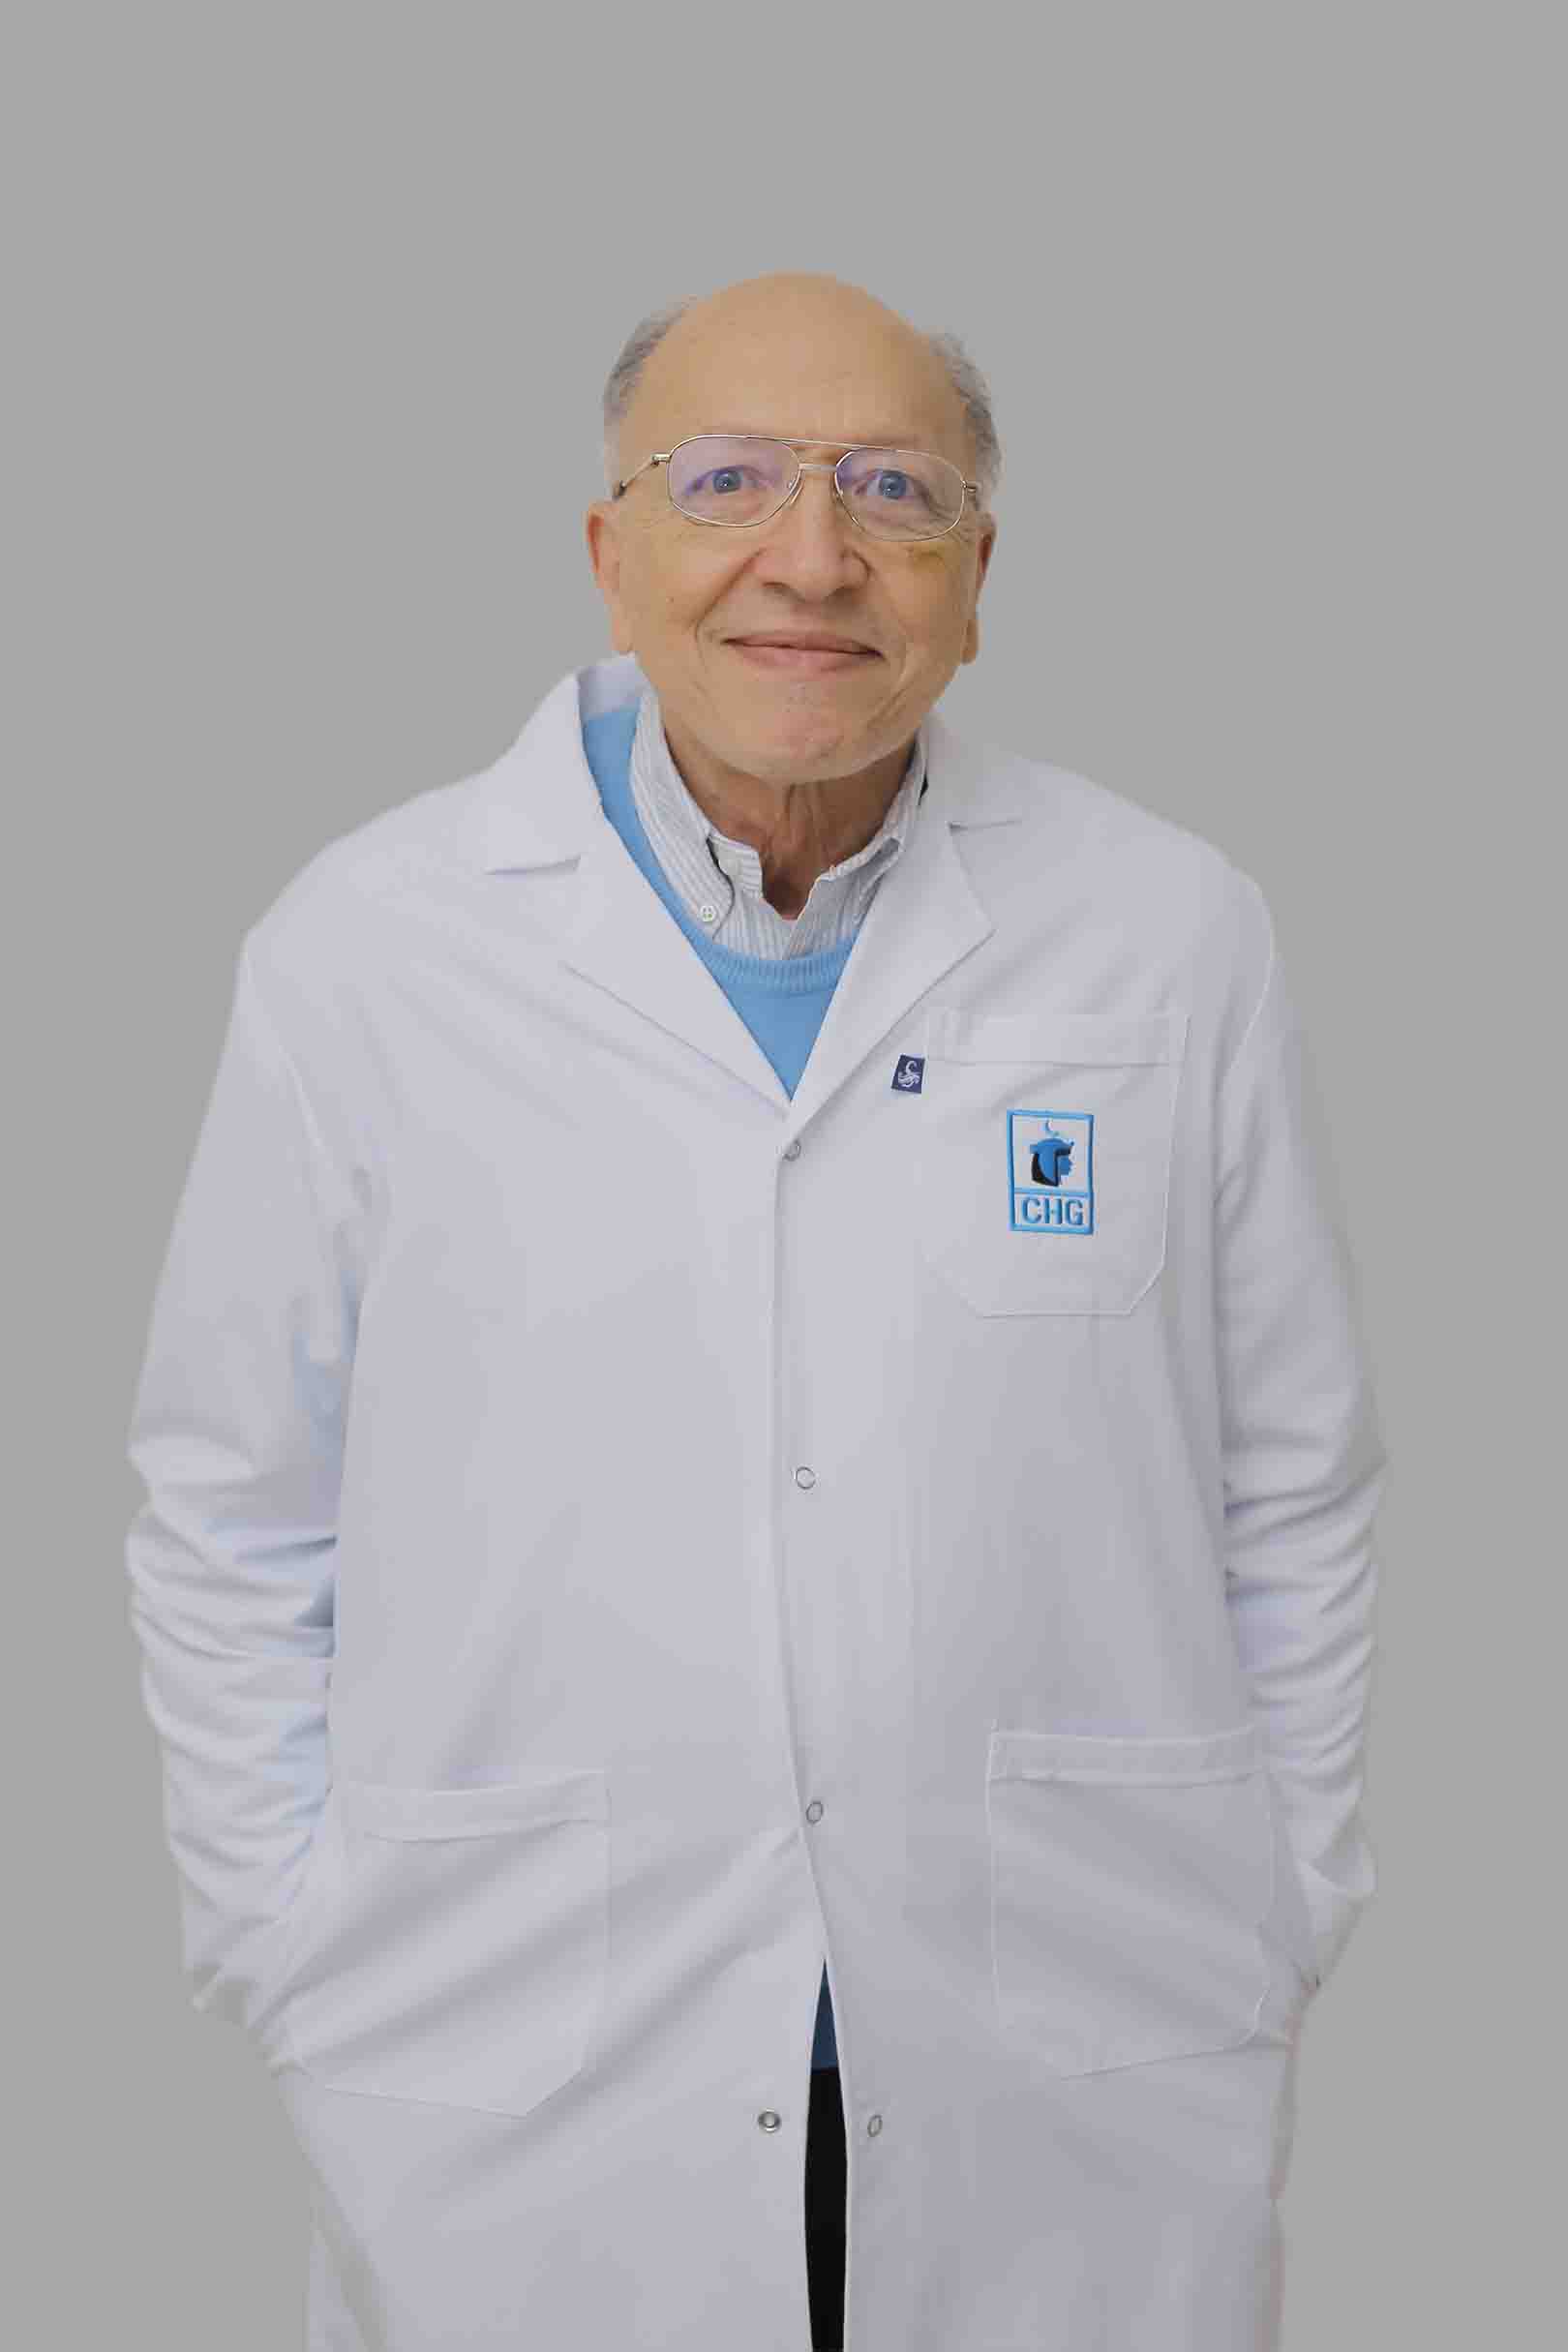 Dr. Ahmed Najib Ali Mohamed Halaqa